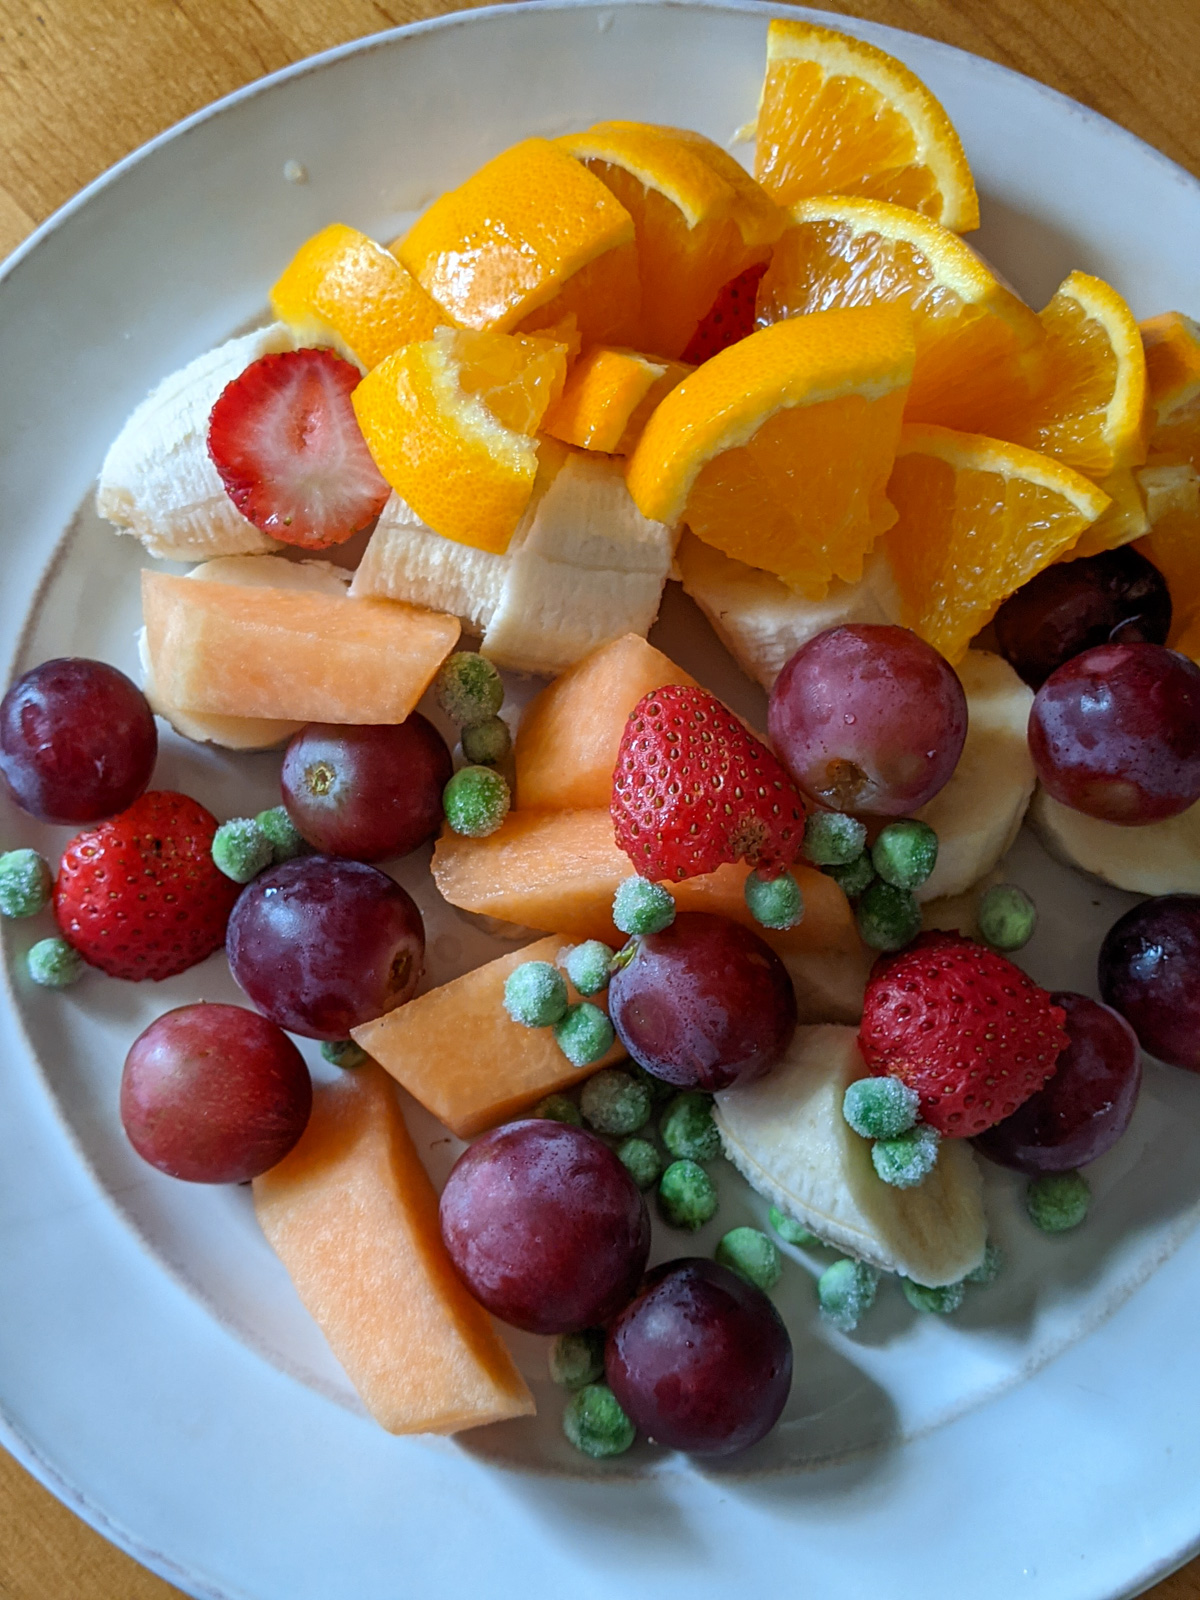 Healthy snacks to share like oranges, melon, grapes, banana, strawberry and peas.